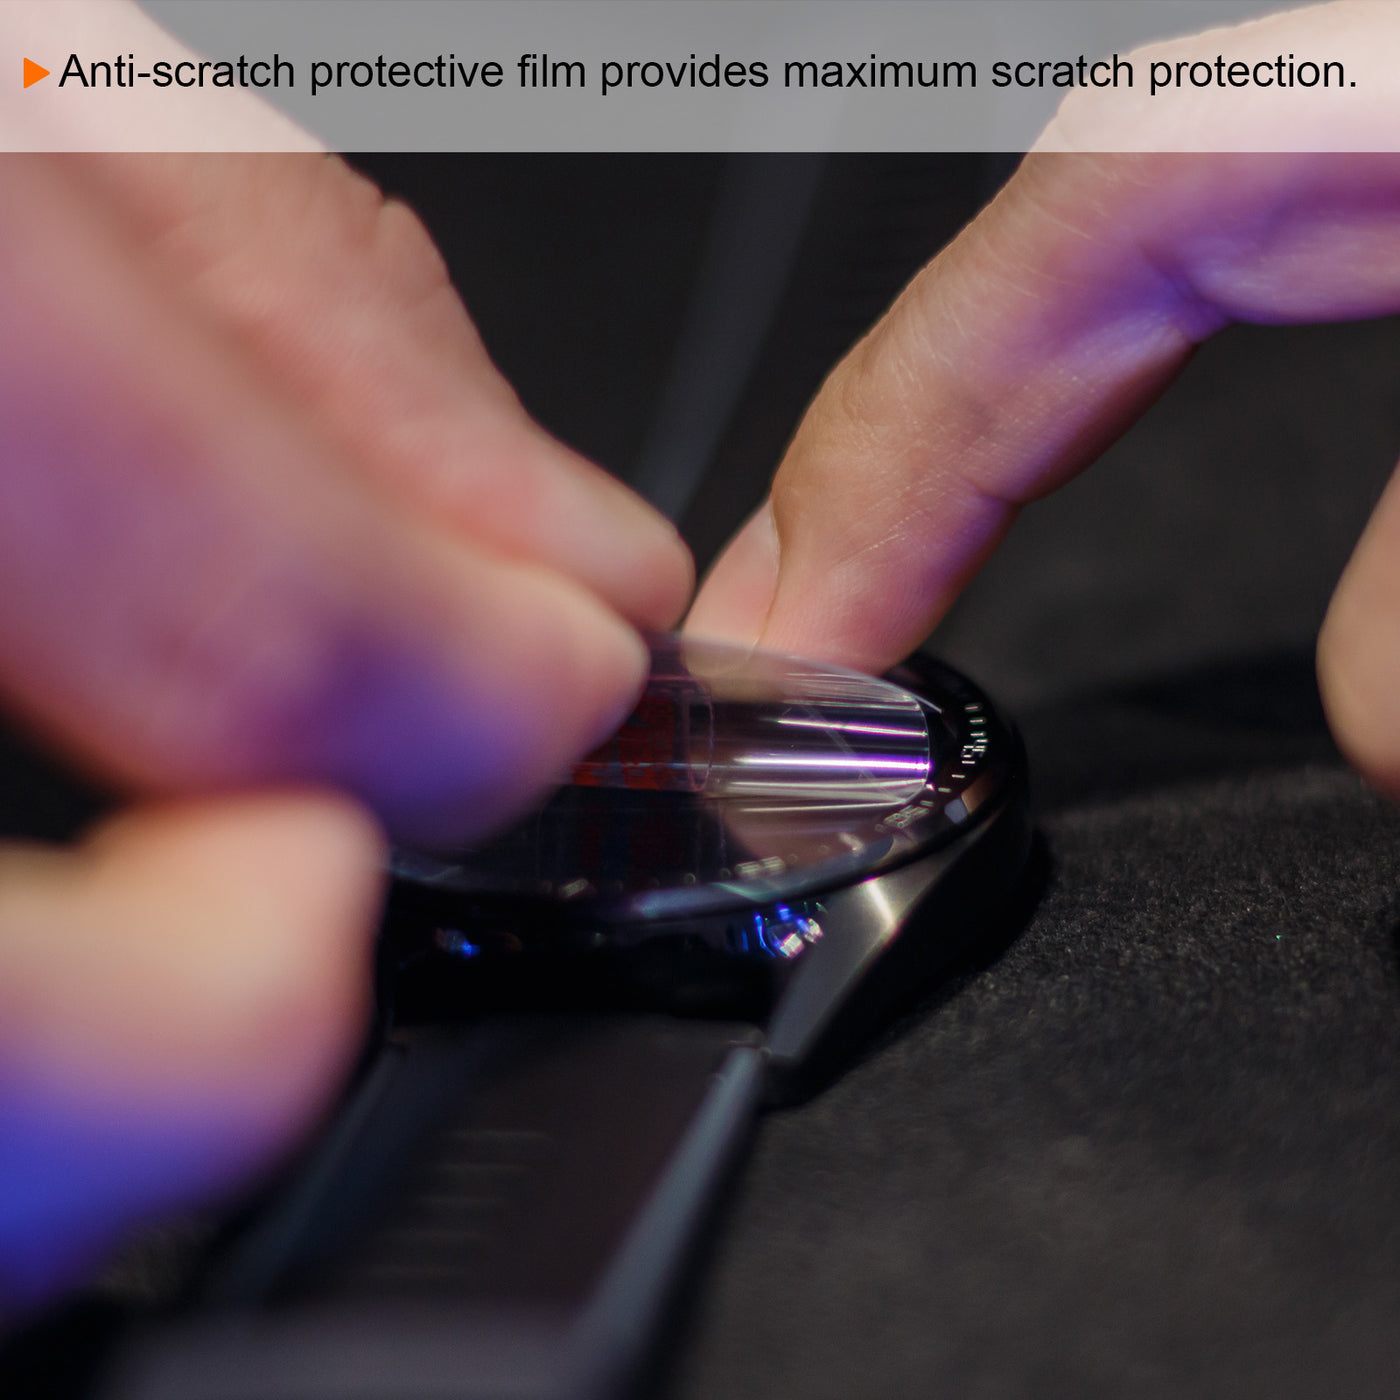 Harfington 27mm Dia 0.35mm Thick Round Soft Fiberglass Smart Watch Screen Protectors 5pcs